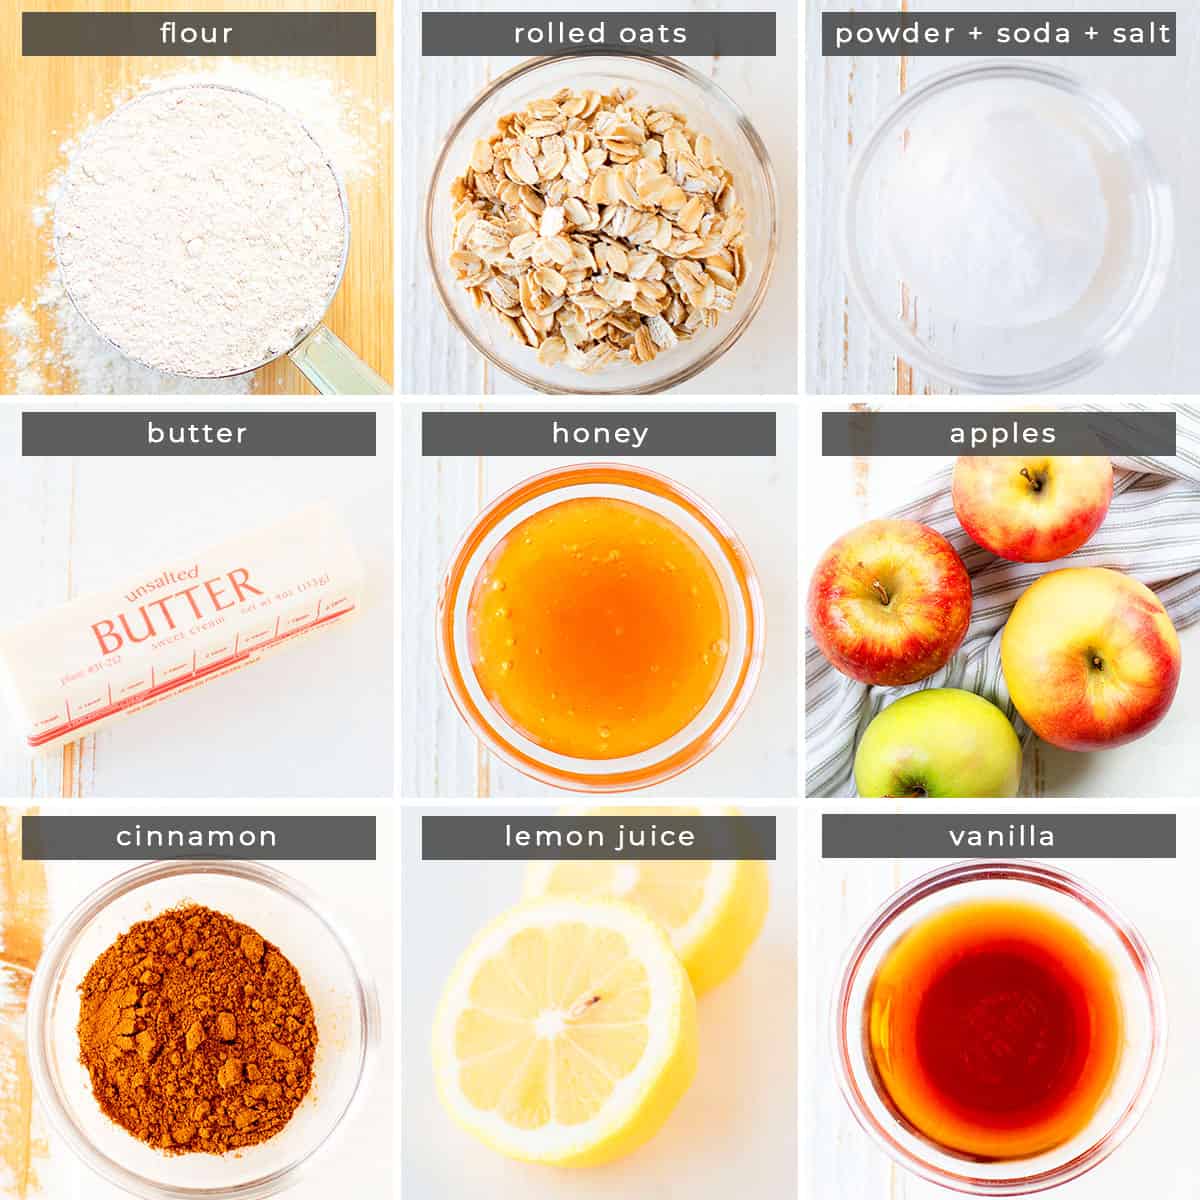 Image containing recipe ingredients flour, rolled oats, baking powder, baking soda, salt, butter, honey, apples, cinnamon, lemon juice, vanilla. 